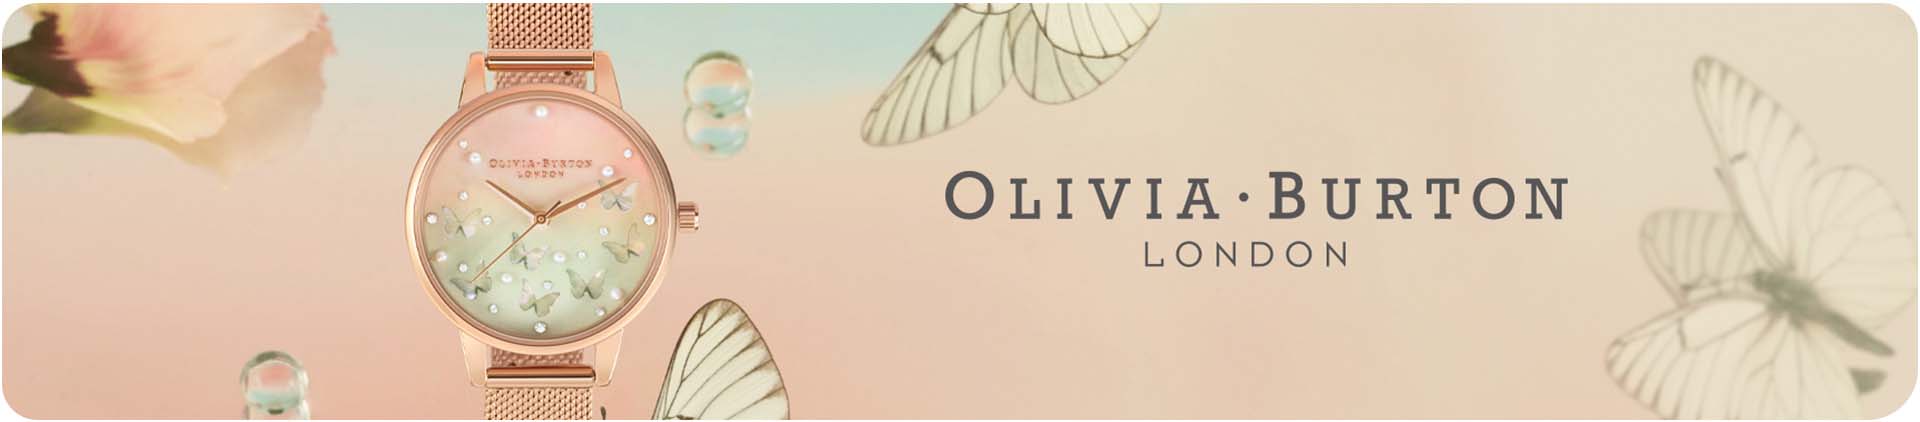 An Olivia Burton watch with surrounding butterflies with text Olivia Burton London